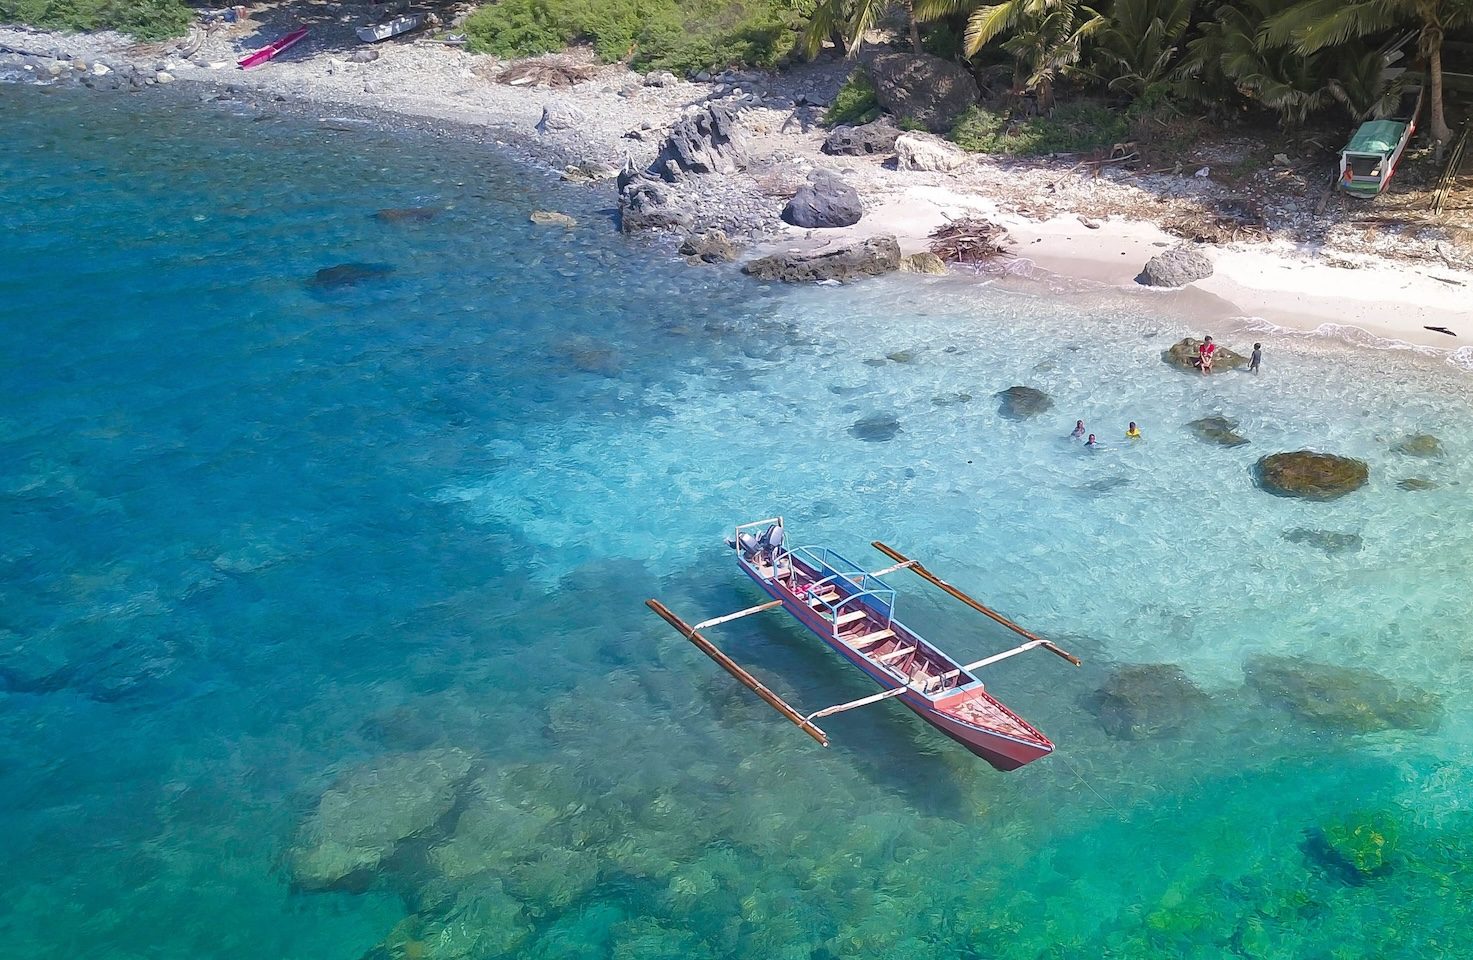 For scuba divers seeking serenity, nothing beats Atauro Island